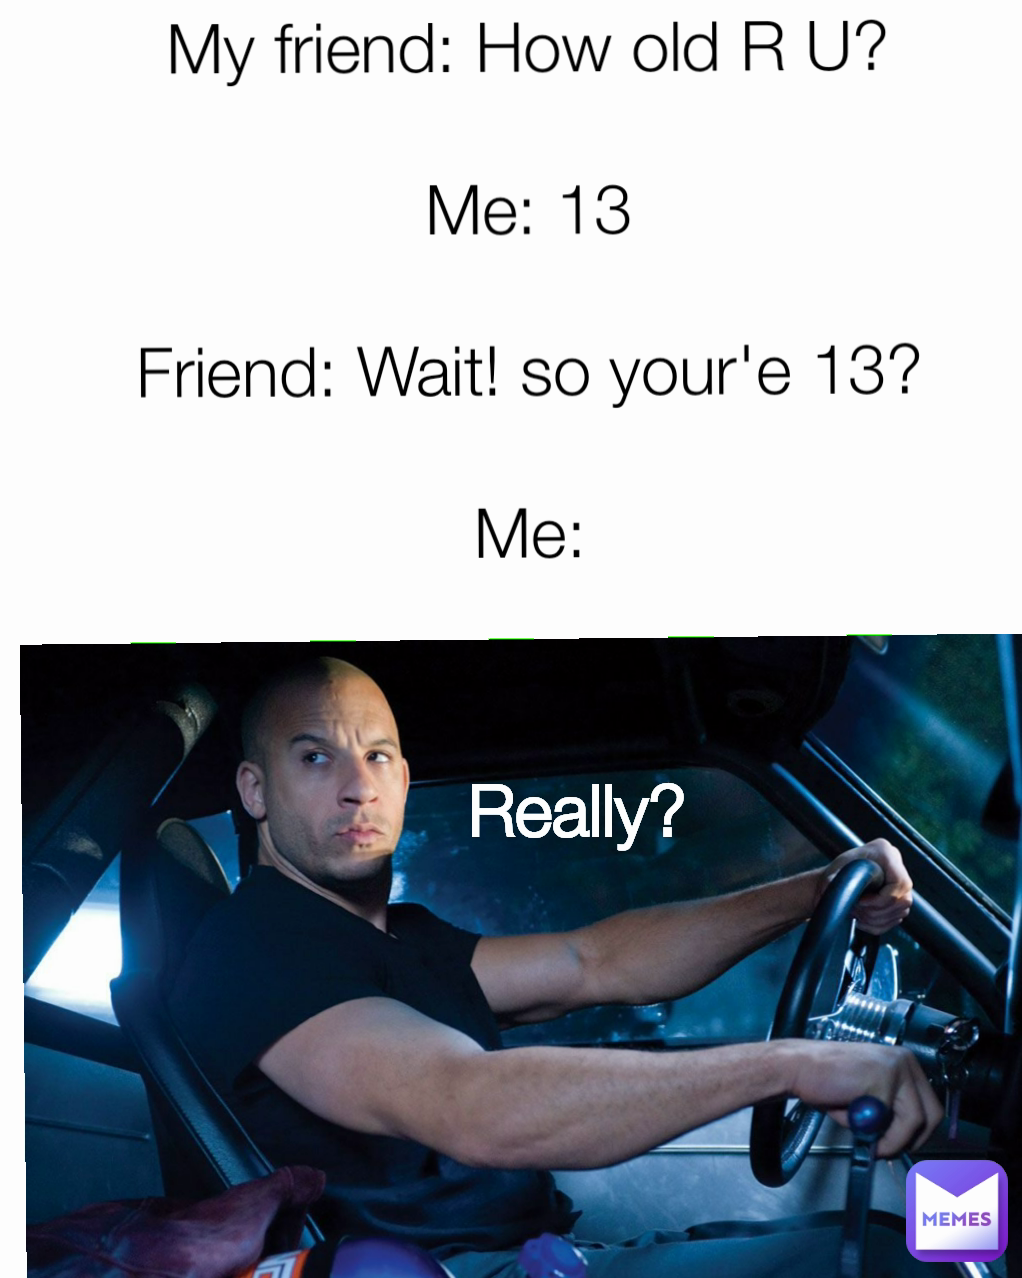 My friend: How old R U?

Me: 13

Friend: Wait! so your'e 13?

Me: Really?